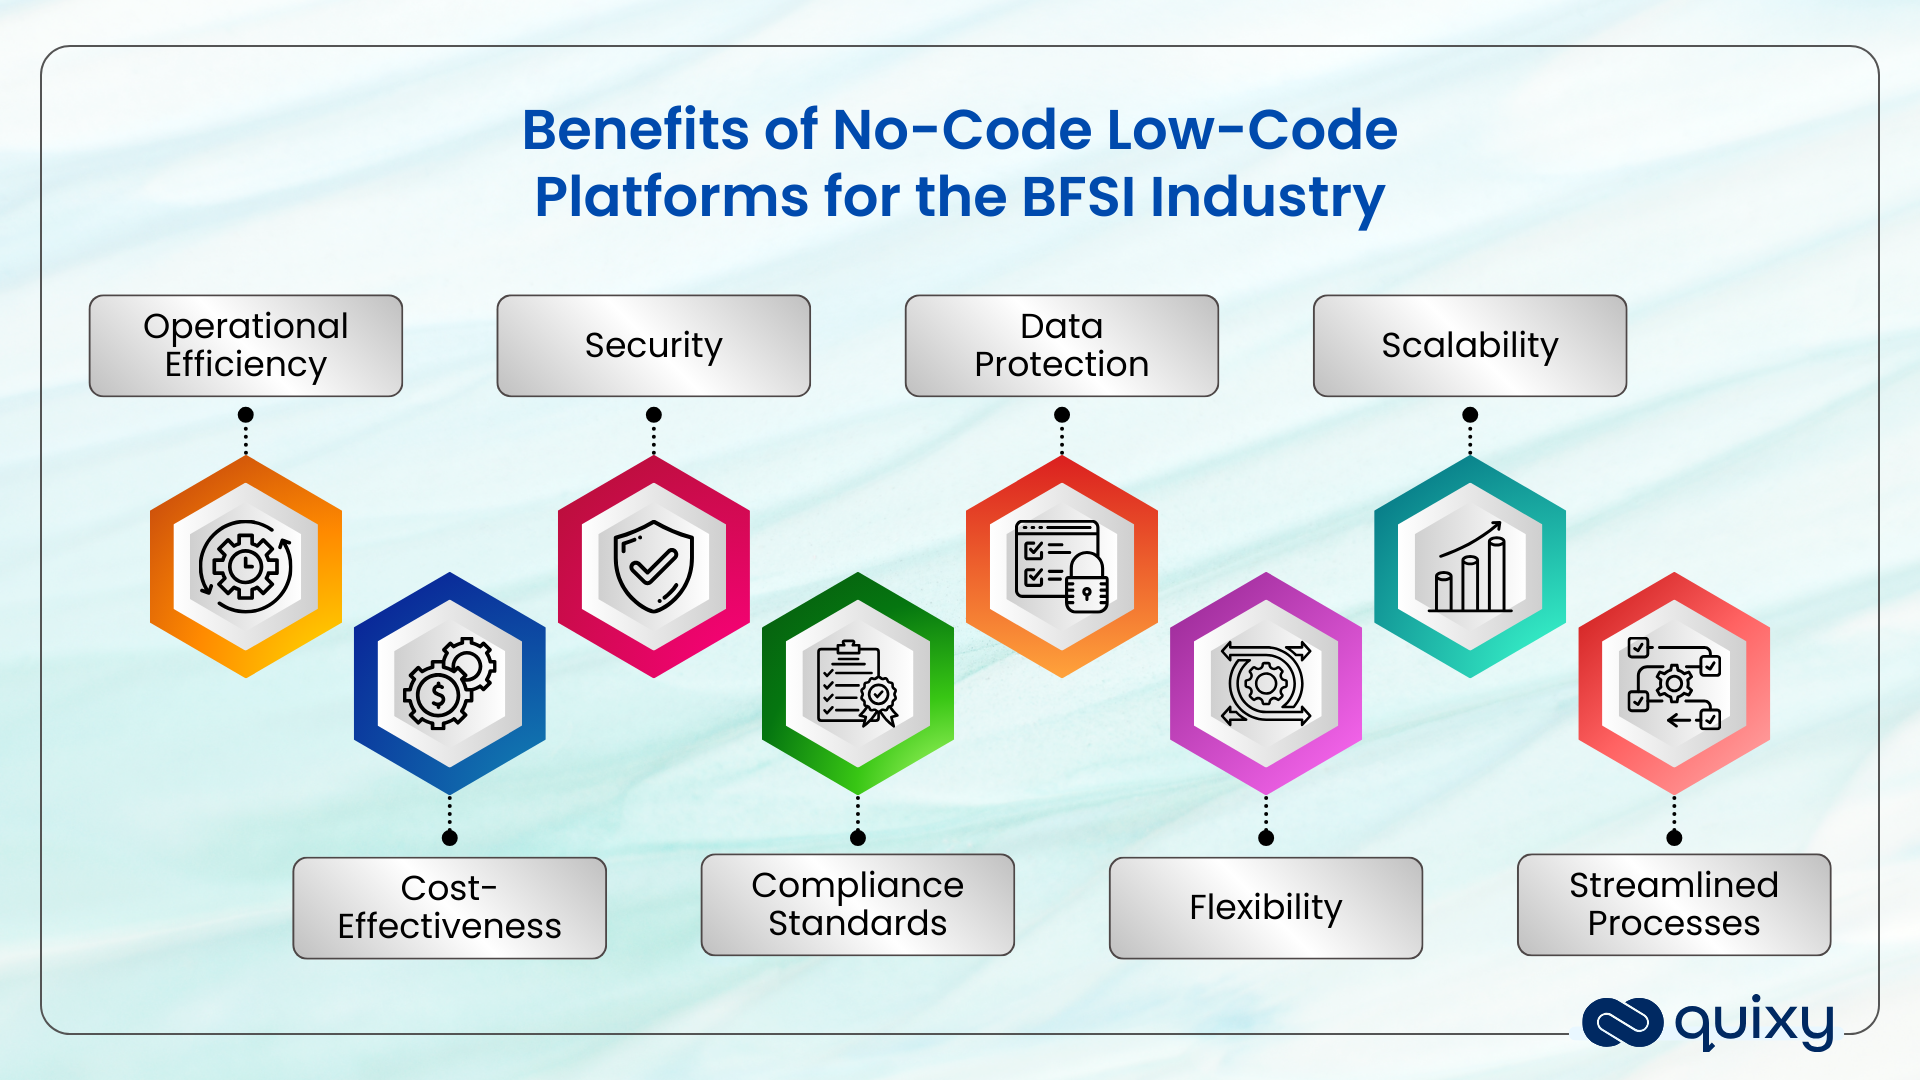 Benefits of No-Code Low-Code Platforms for BFSI Industry